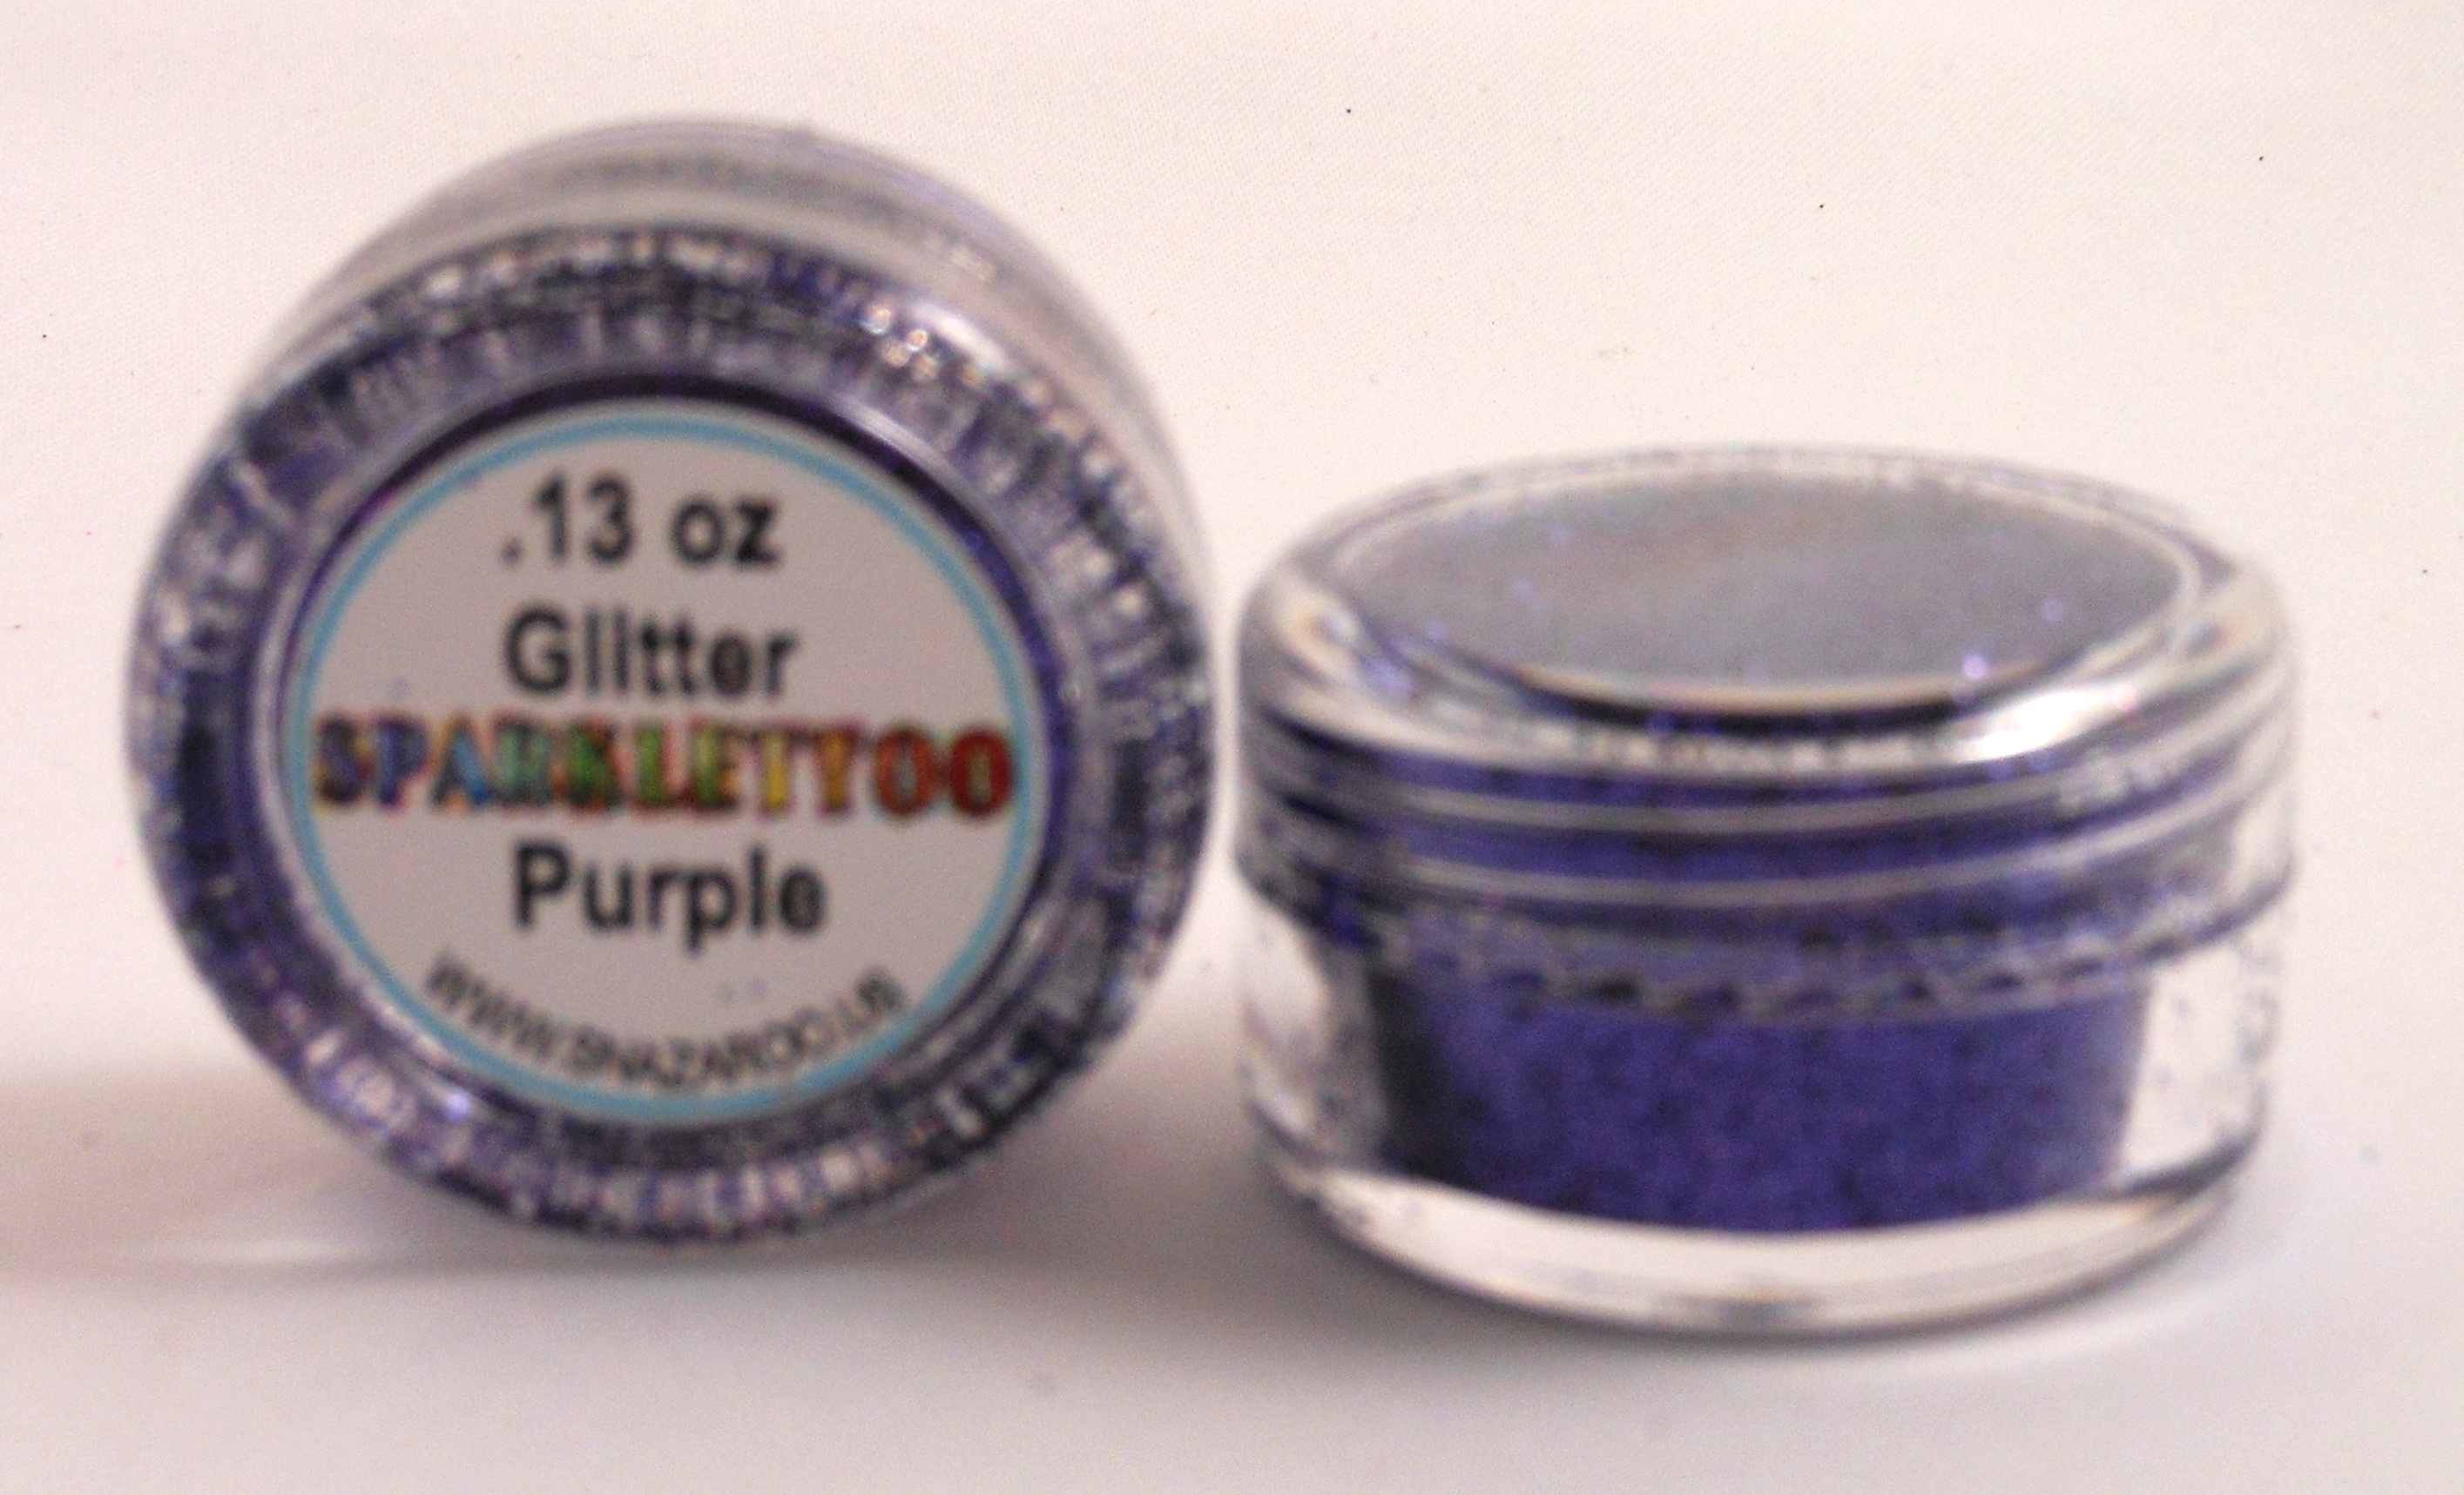 Glitter Purple .13 oz. 